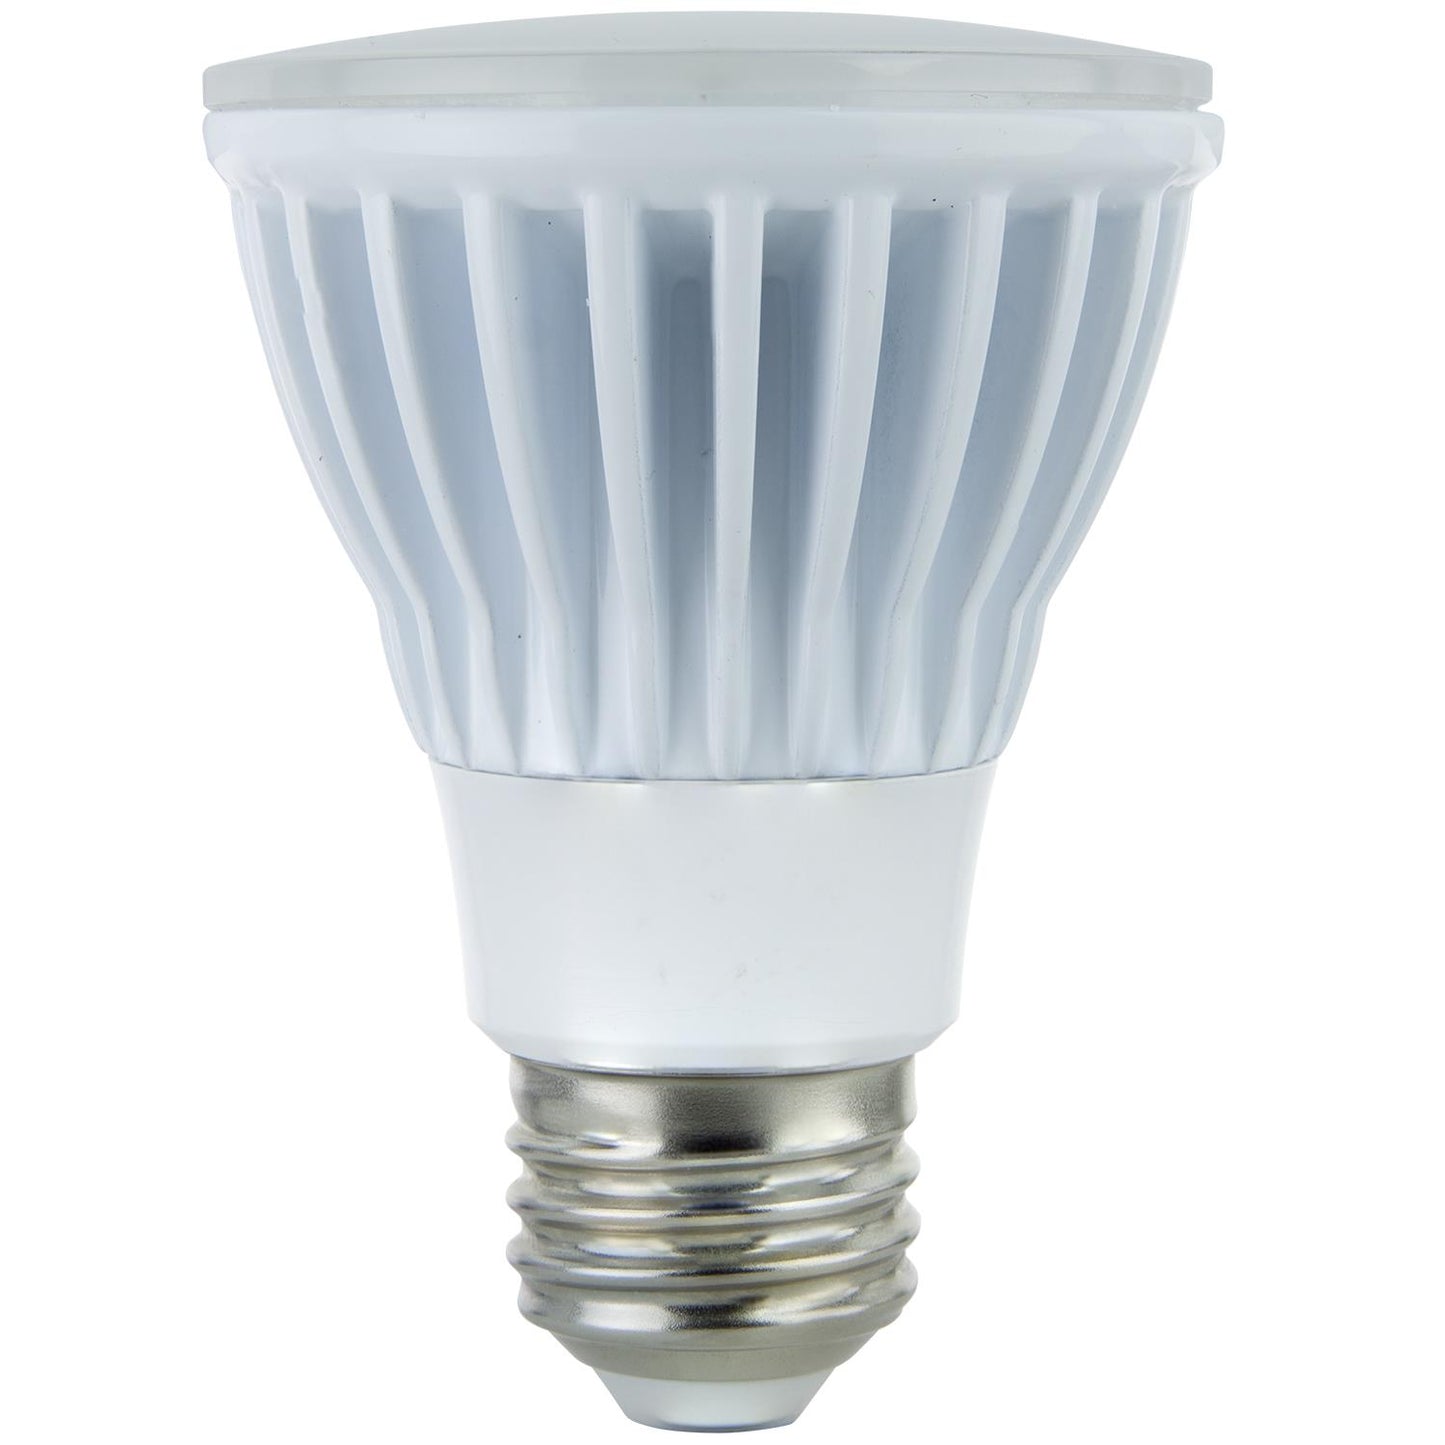 Sunlite PAR20 High Lumen Reflector, 500 Lumens, Medium Base Light Bulb, Warm White